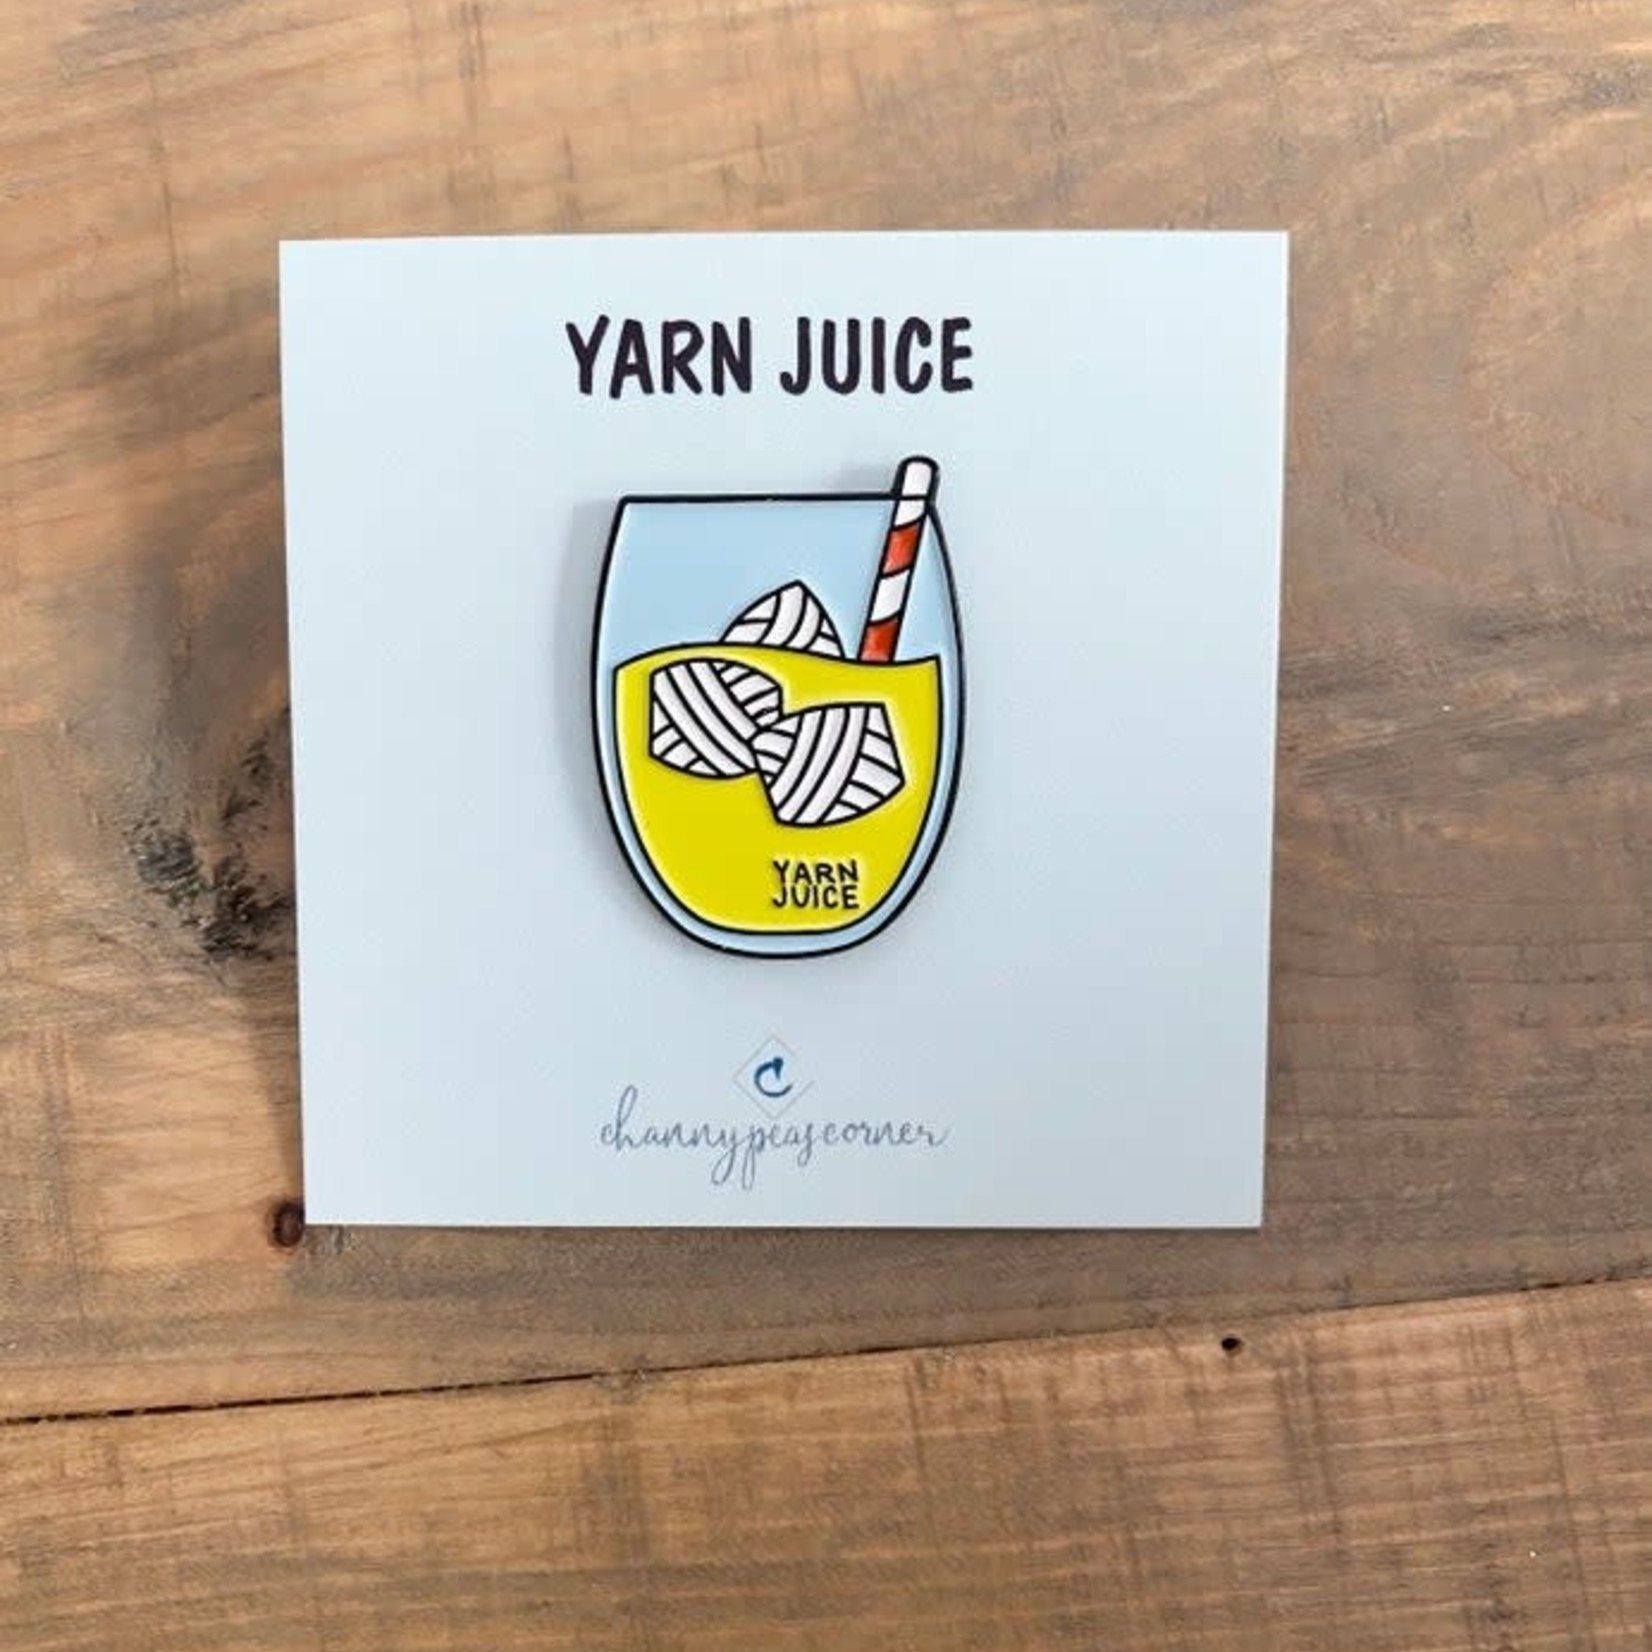 Yarn Juice Pin by Channypeascorner